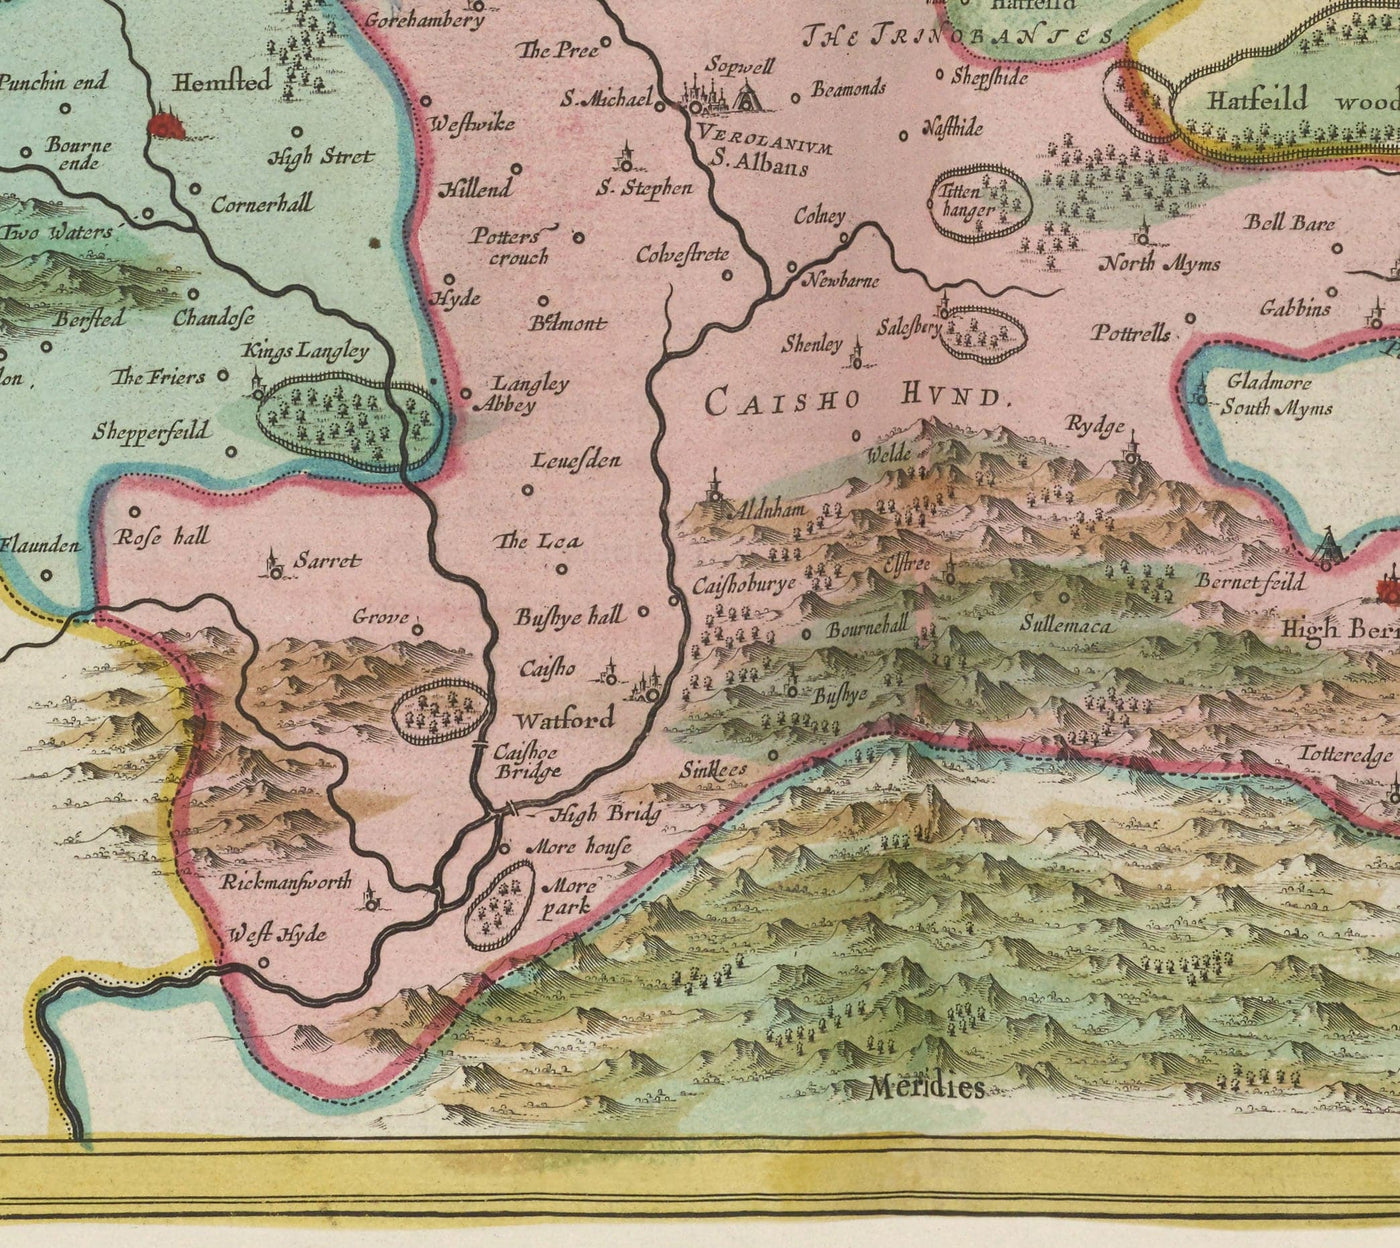 Old Map of Hertfordshire, 1665 by Blaeu - Stevenage, St Albans, Watford, Enfield, Barnet, Hatfield, Hemel Hempstead